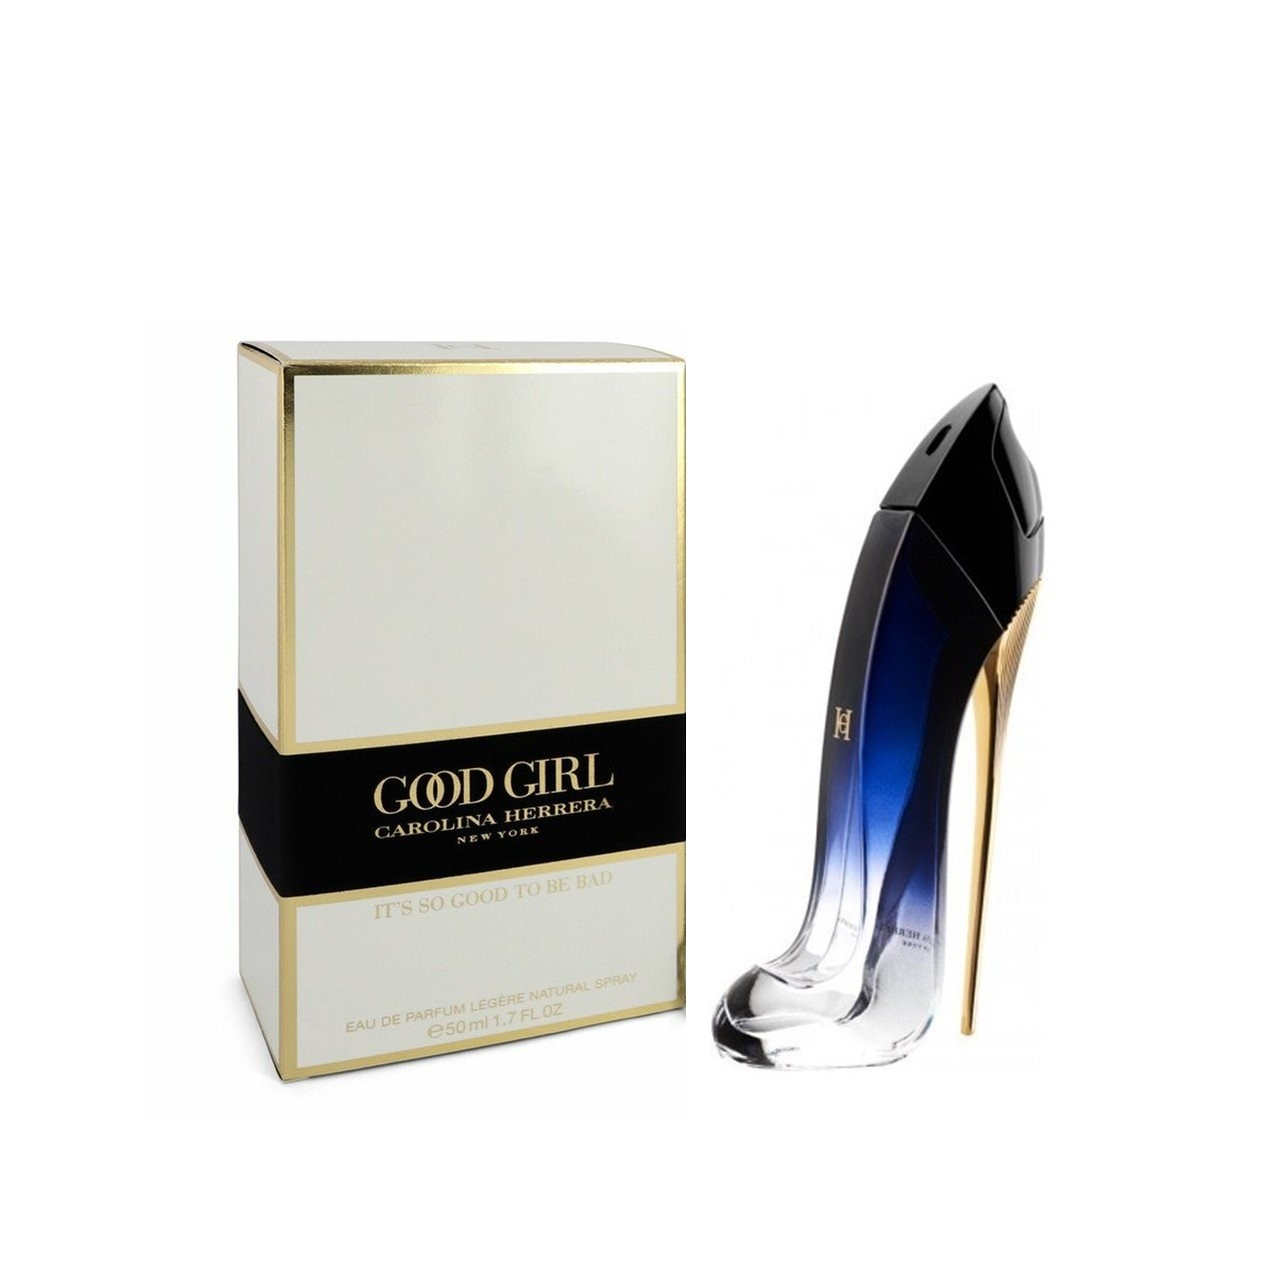 Carolina Herrera Good Girl Eau de Parfum Légère 50ml (1.7fl oz)